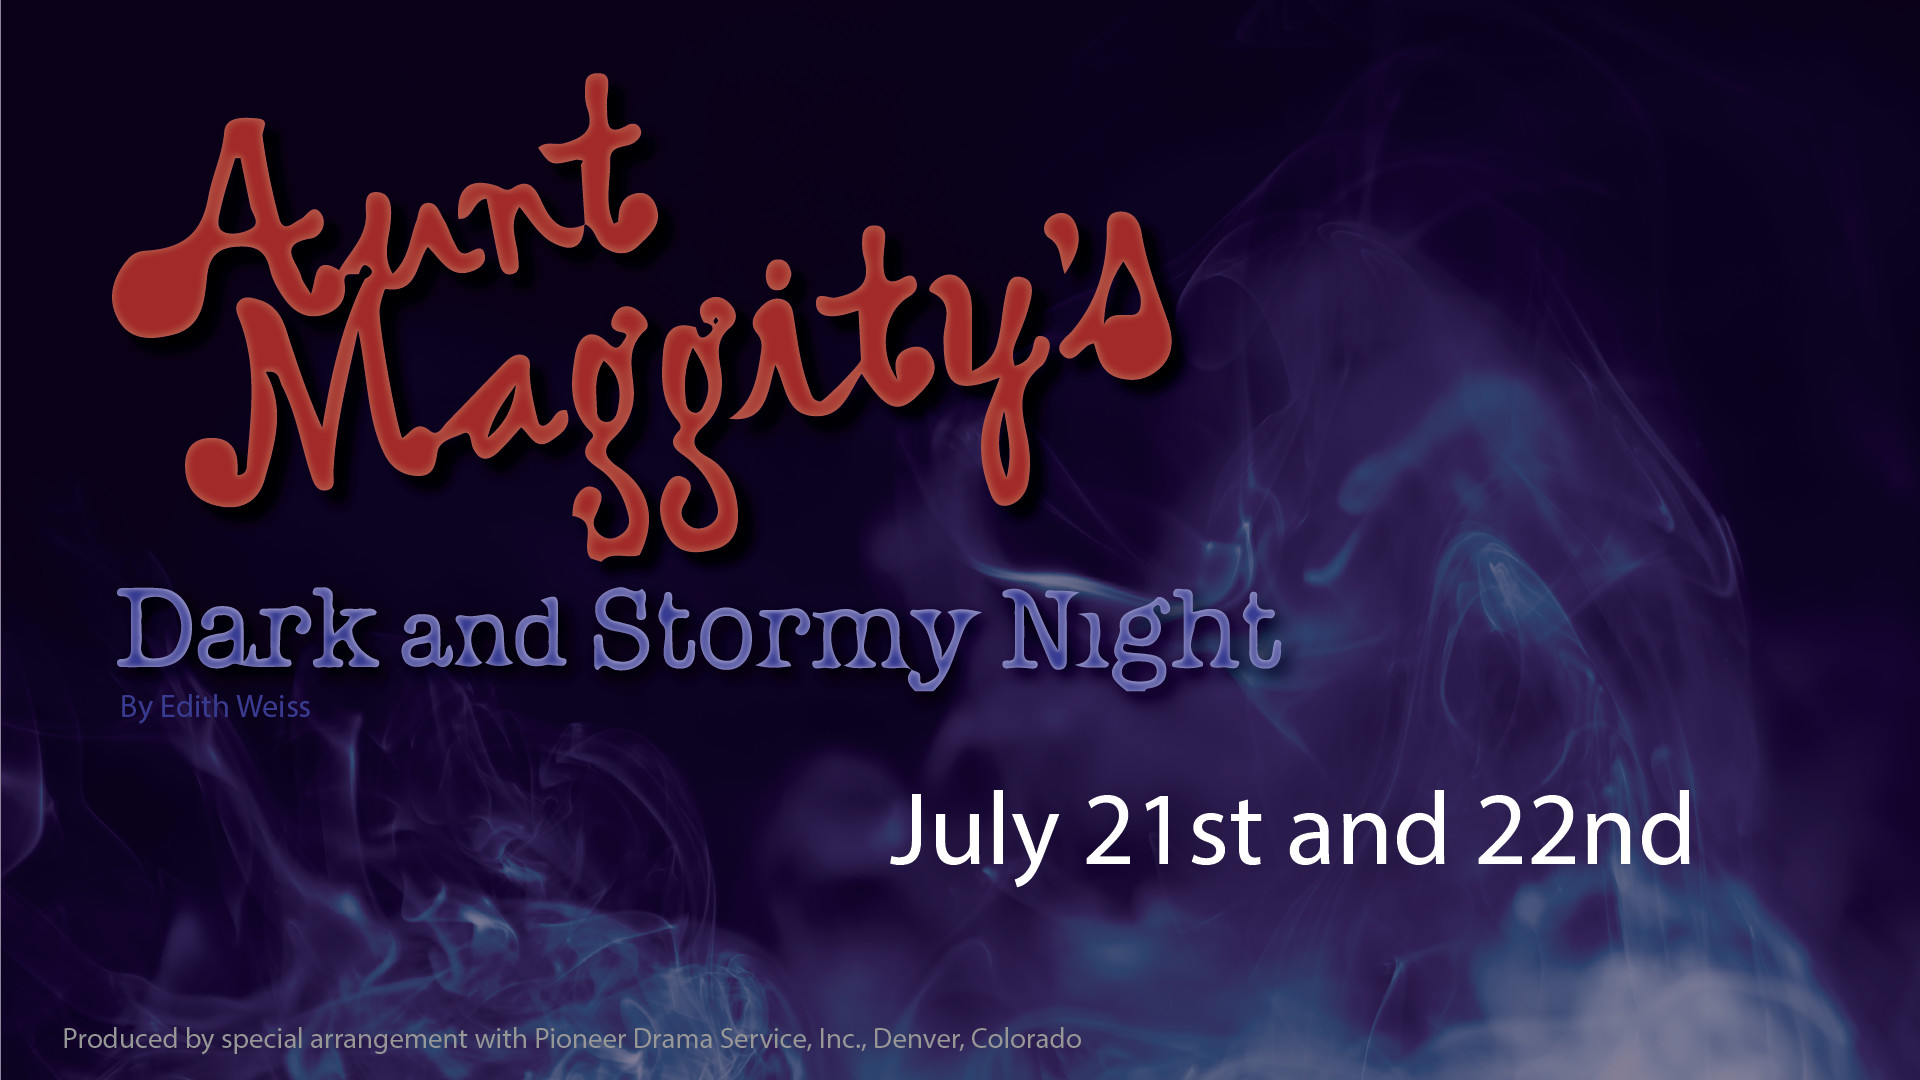 1920x1080 Aunt Maggity's Dark And Stormy Night